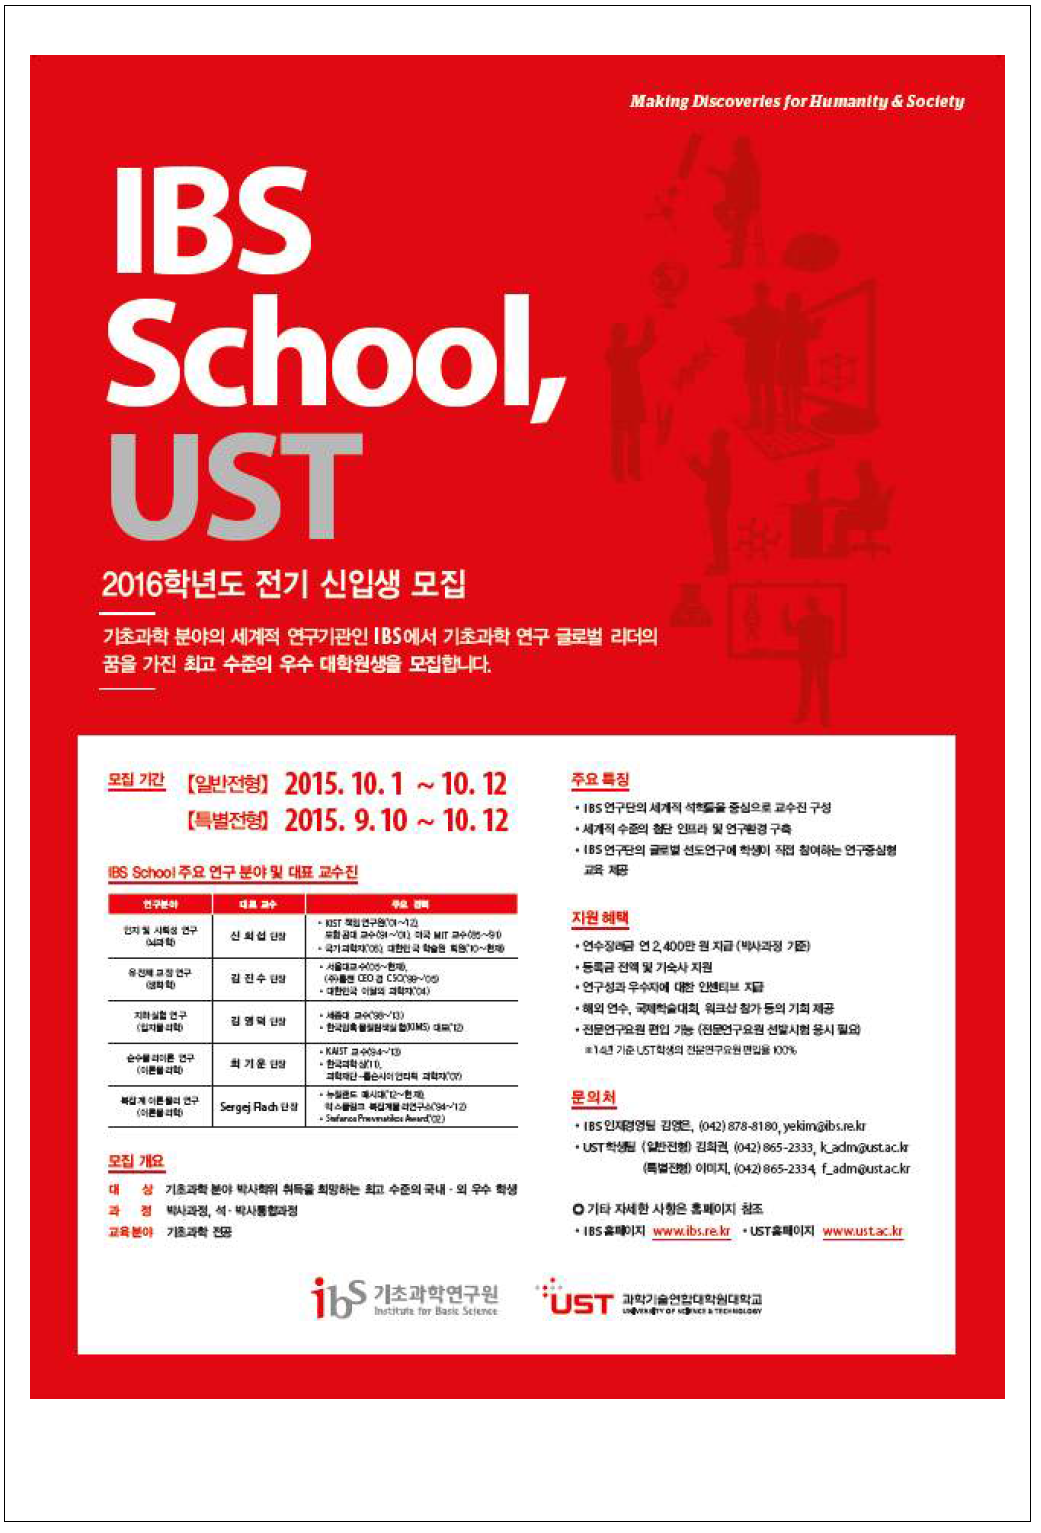 IBS School, UST 2016 전기 신입생 모집 포스터형 광고(국문)